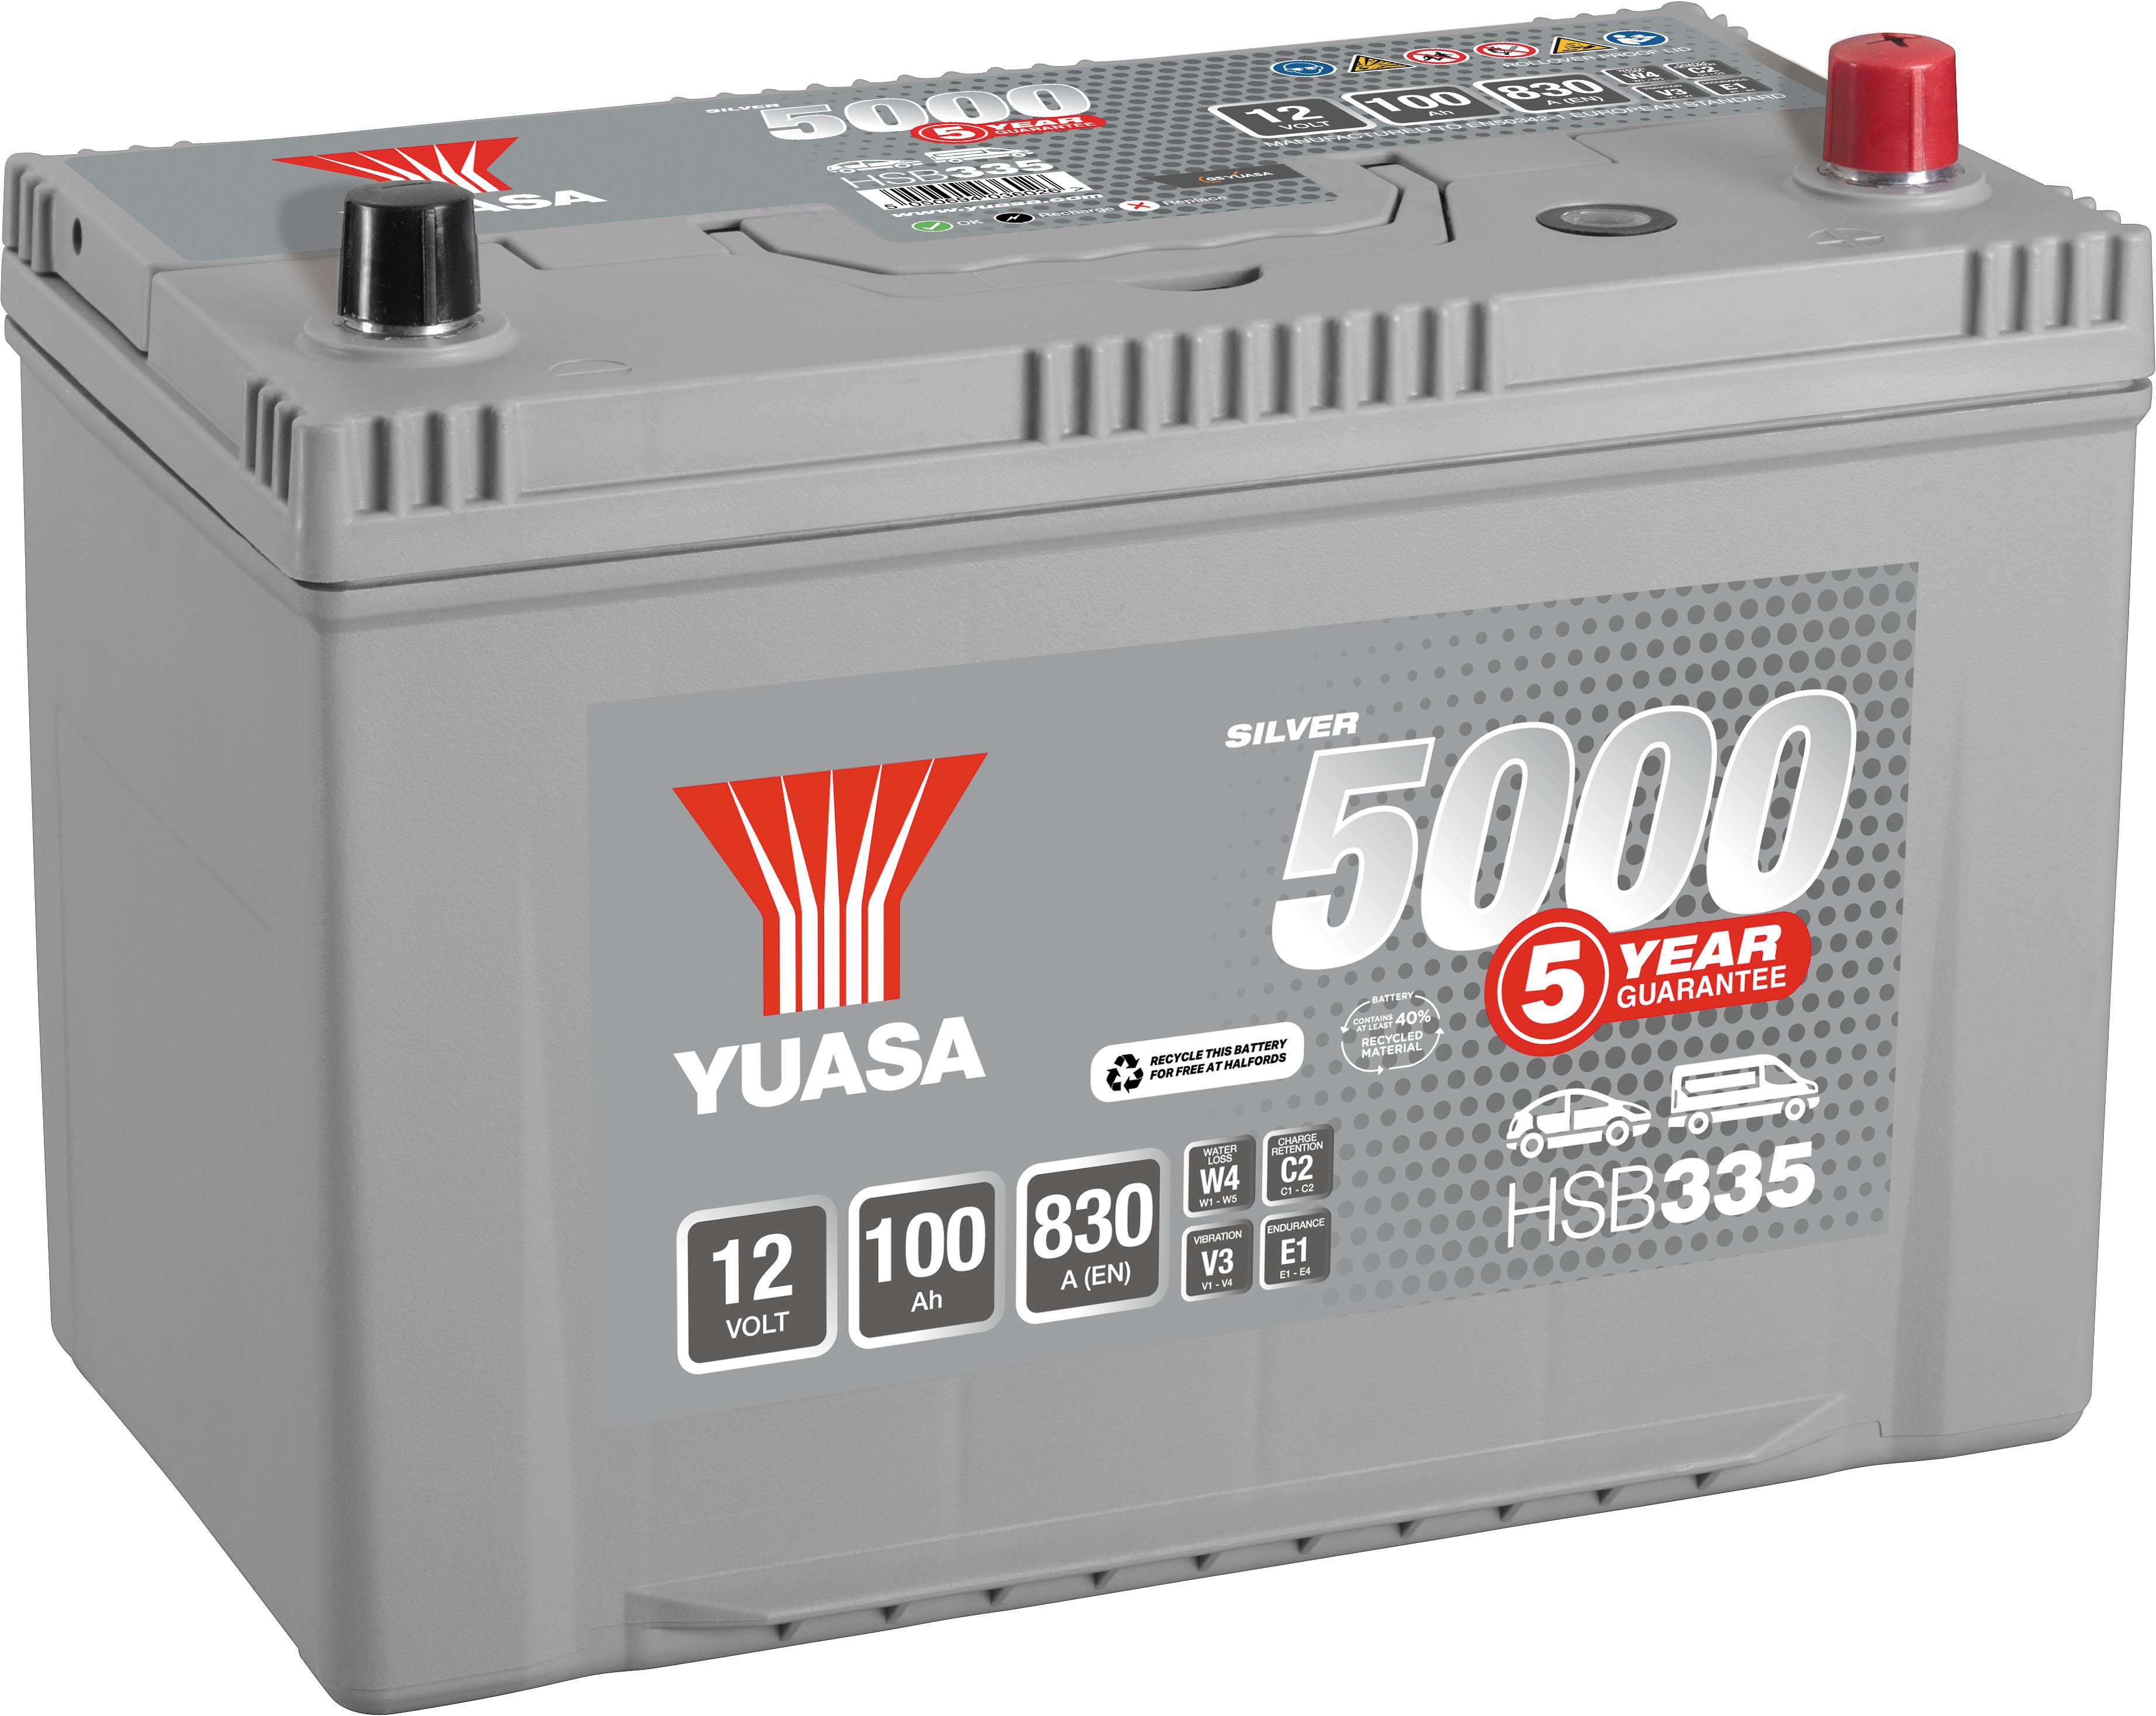 Yuasa Hsb335 Silver 12V Car Battery 5 Year Guarantee